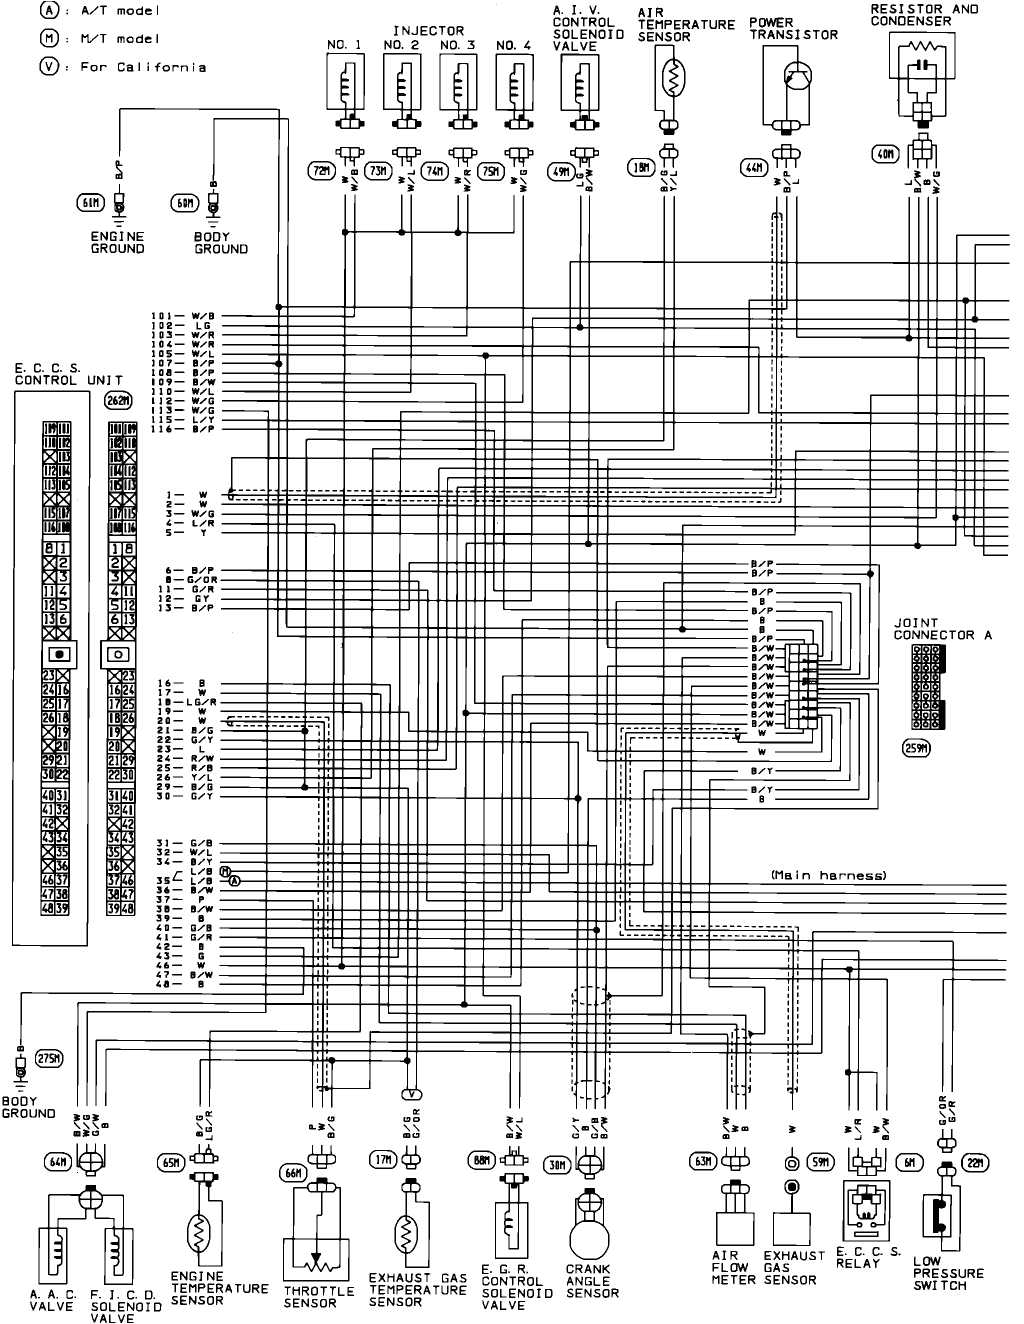 1991 nissan d21 wiring diagram wiring diagram more 1991 nissan d21 wiring diagram 1991 nissan d21